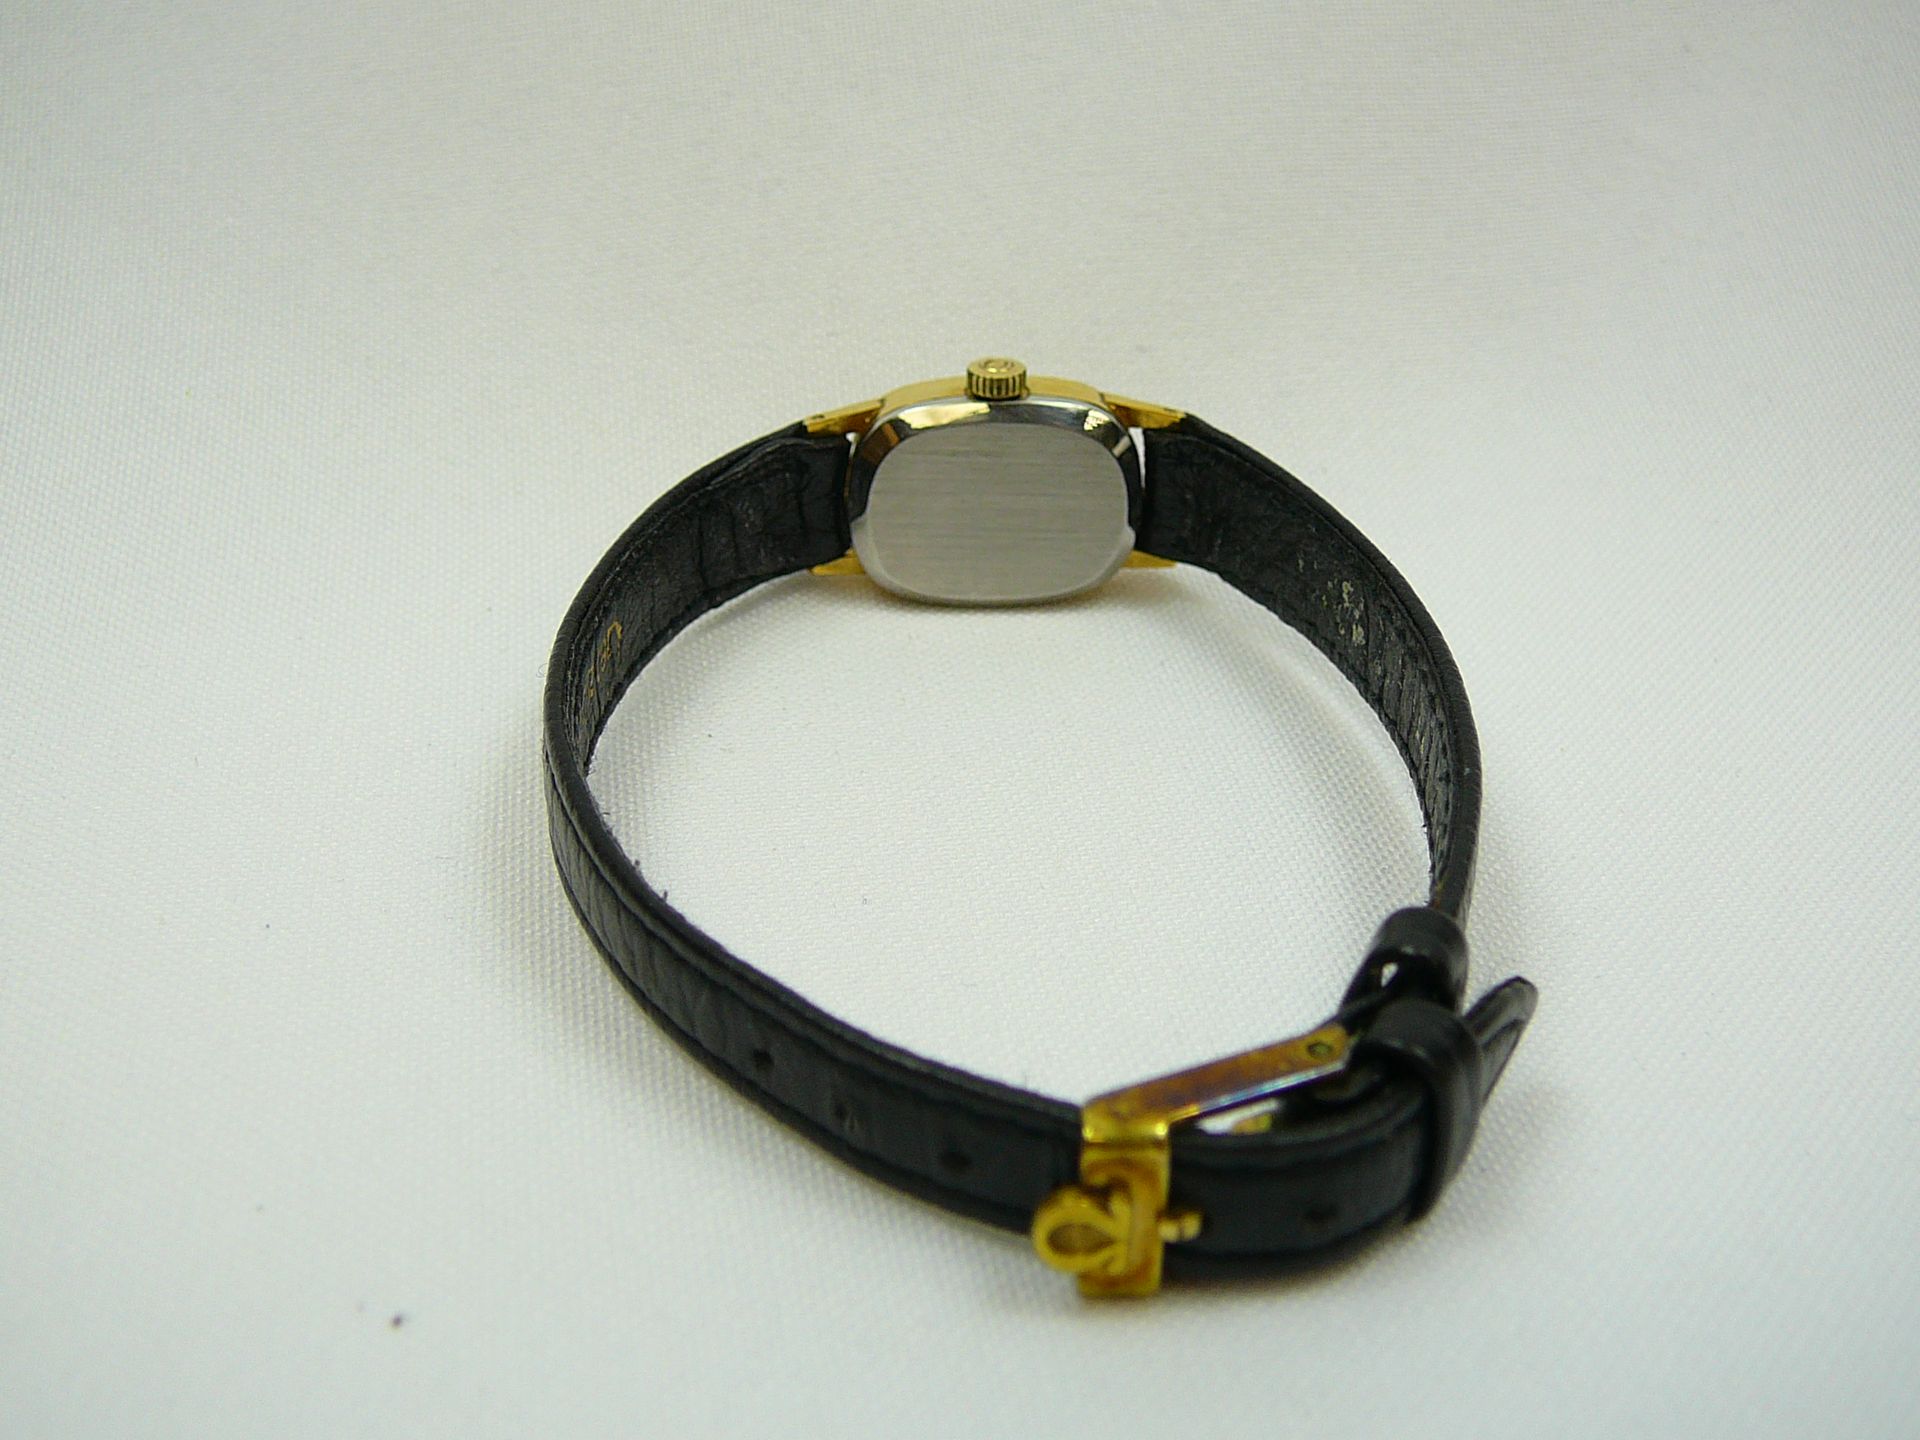 Ladies Vintage Omega Wrist Watch - Image 3 of 3